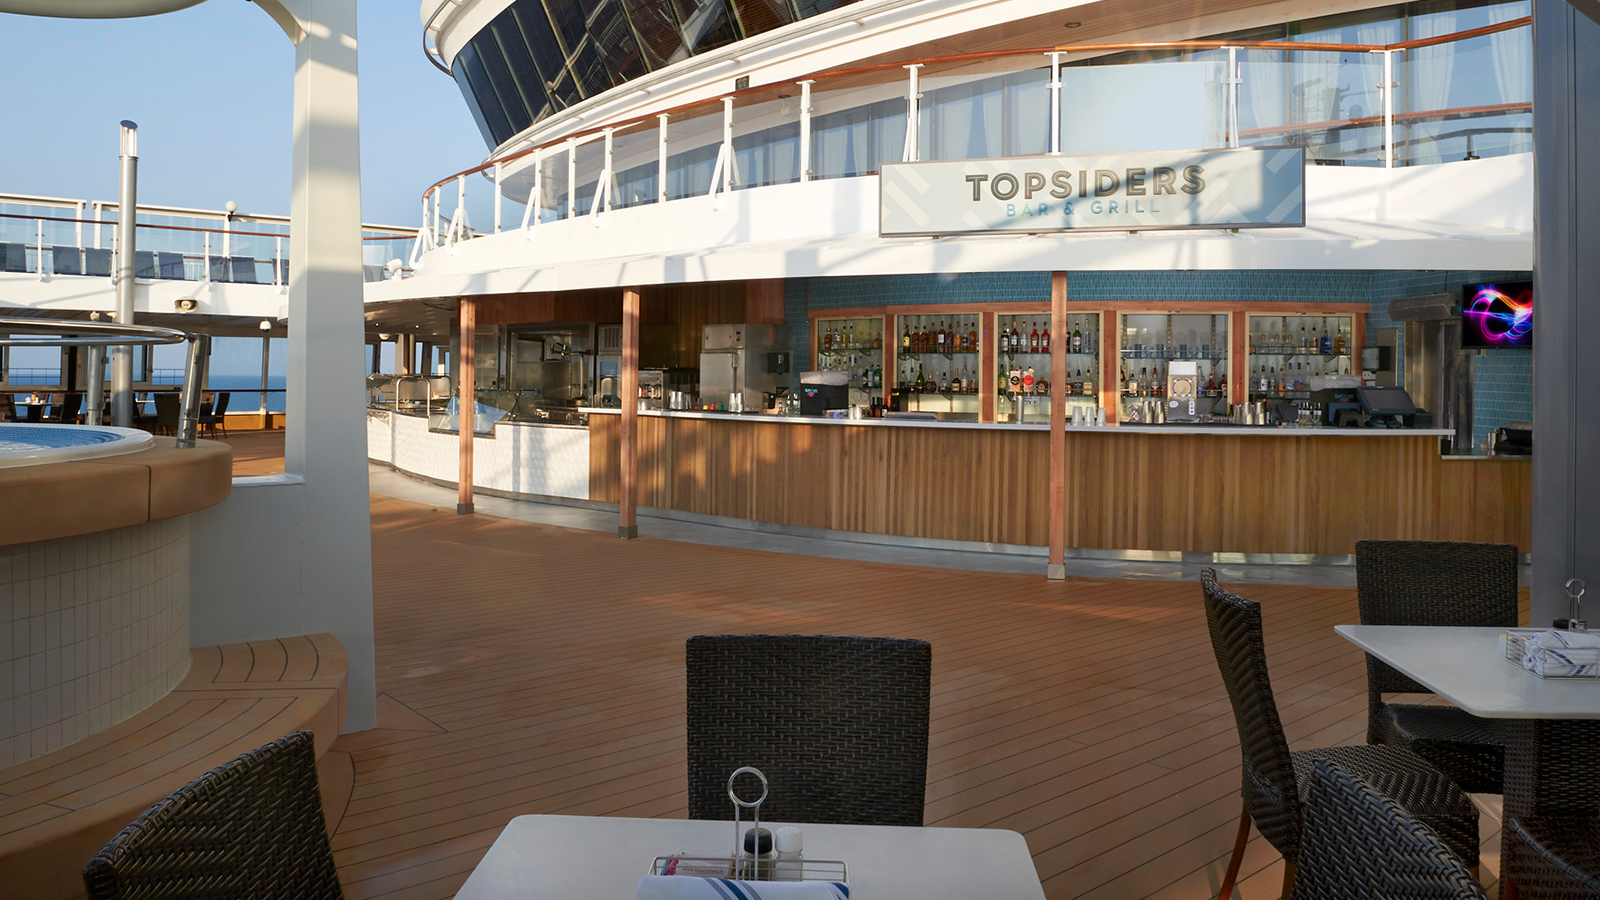 Topsiders Bar & Grill on the Norwegian Jewel